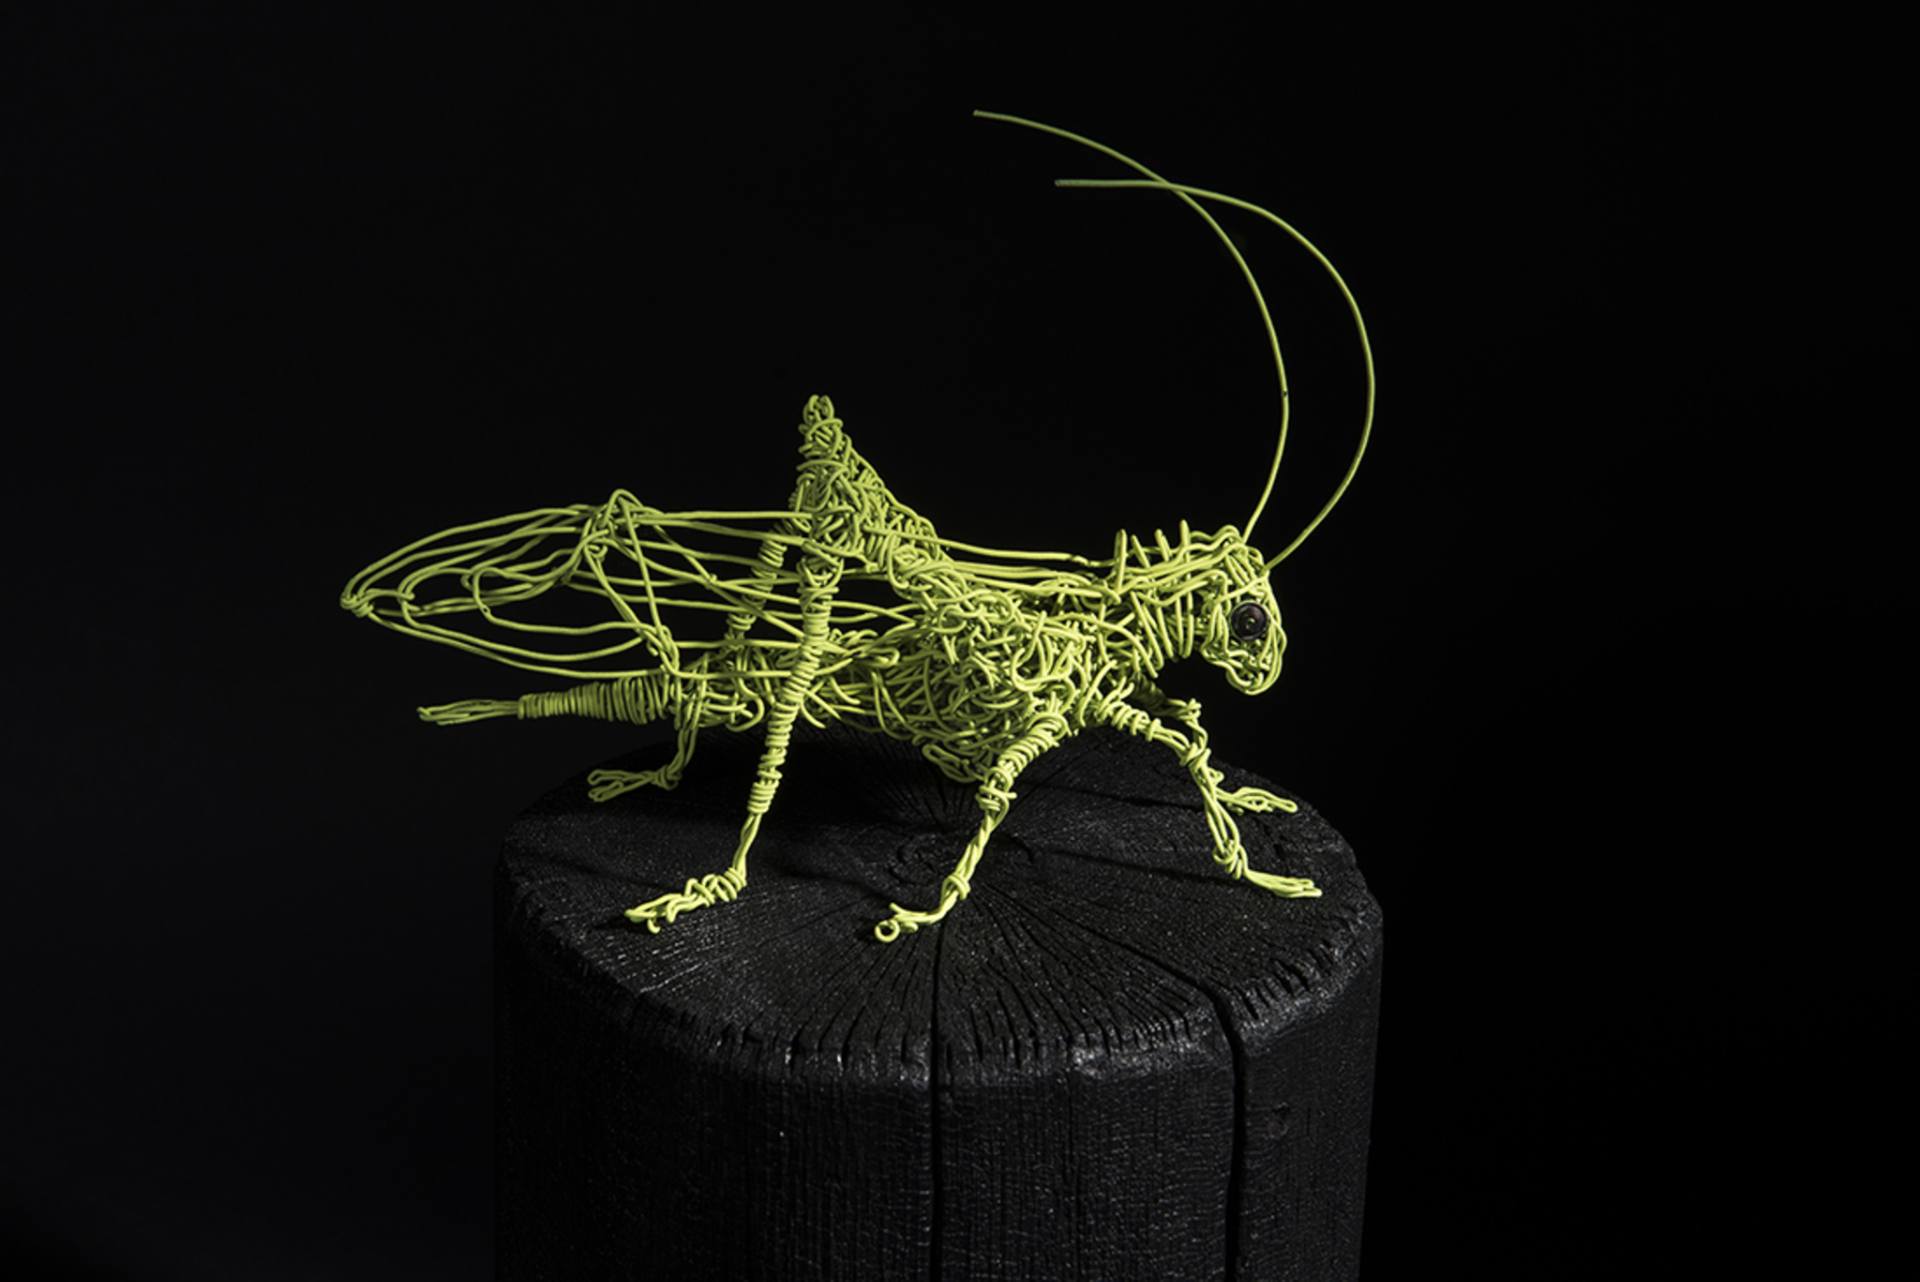 Saatchi Art: Wire sculpture, Metal Art, Grasshopper sculpture, Metal ...